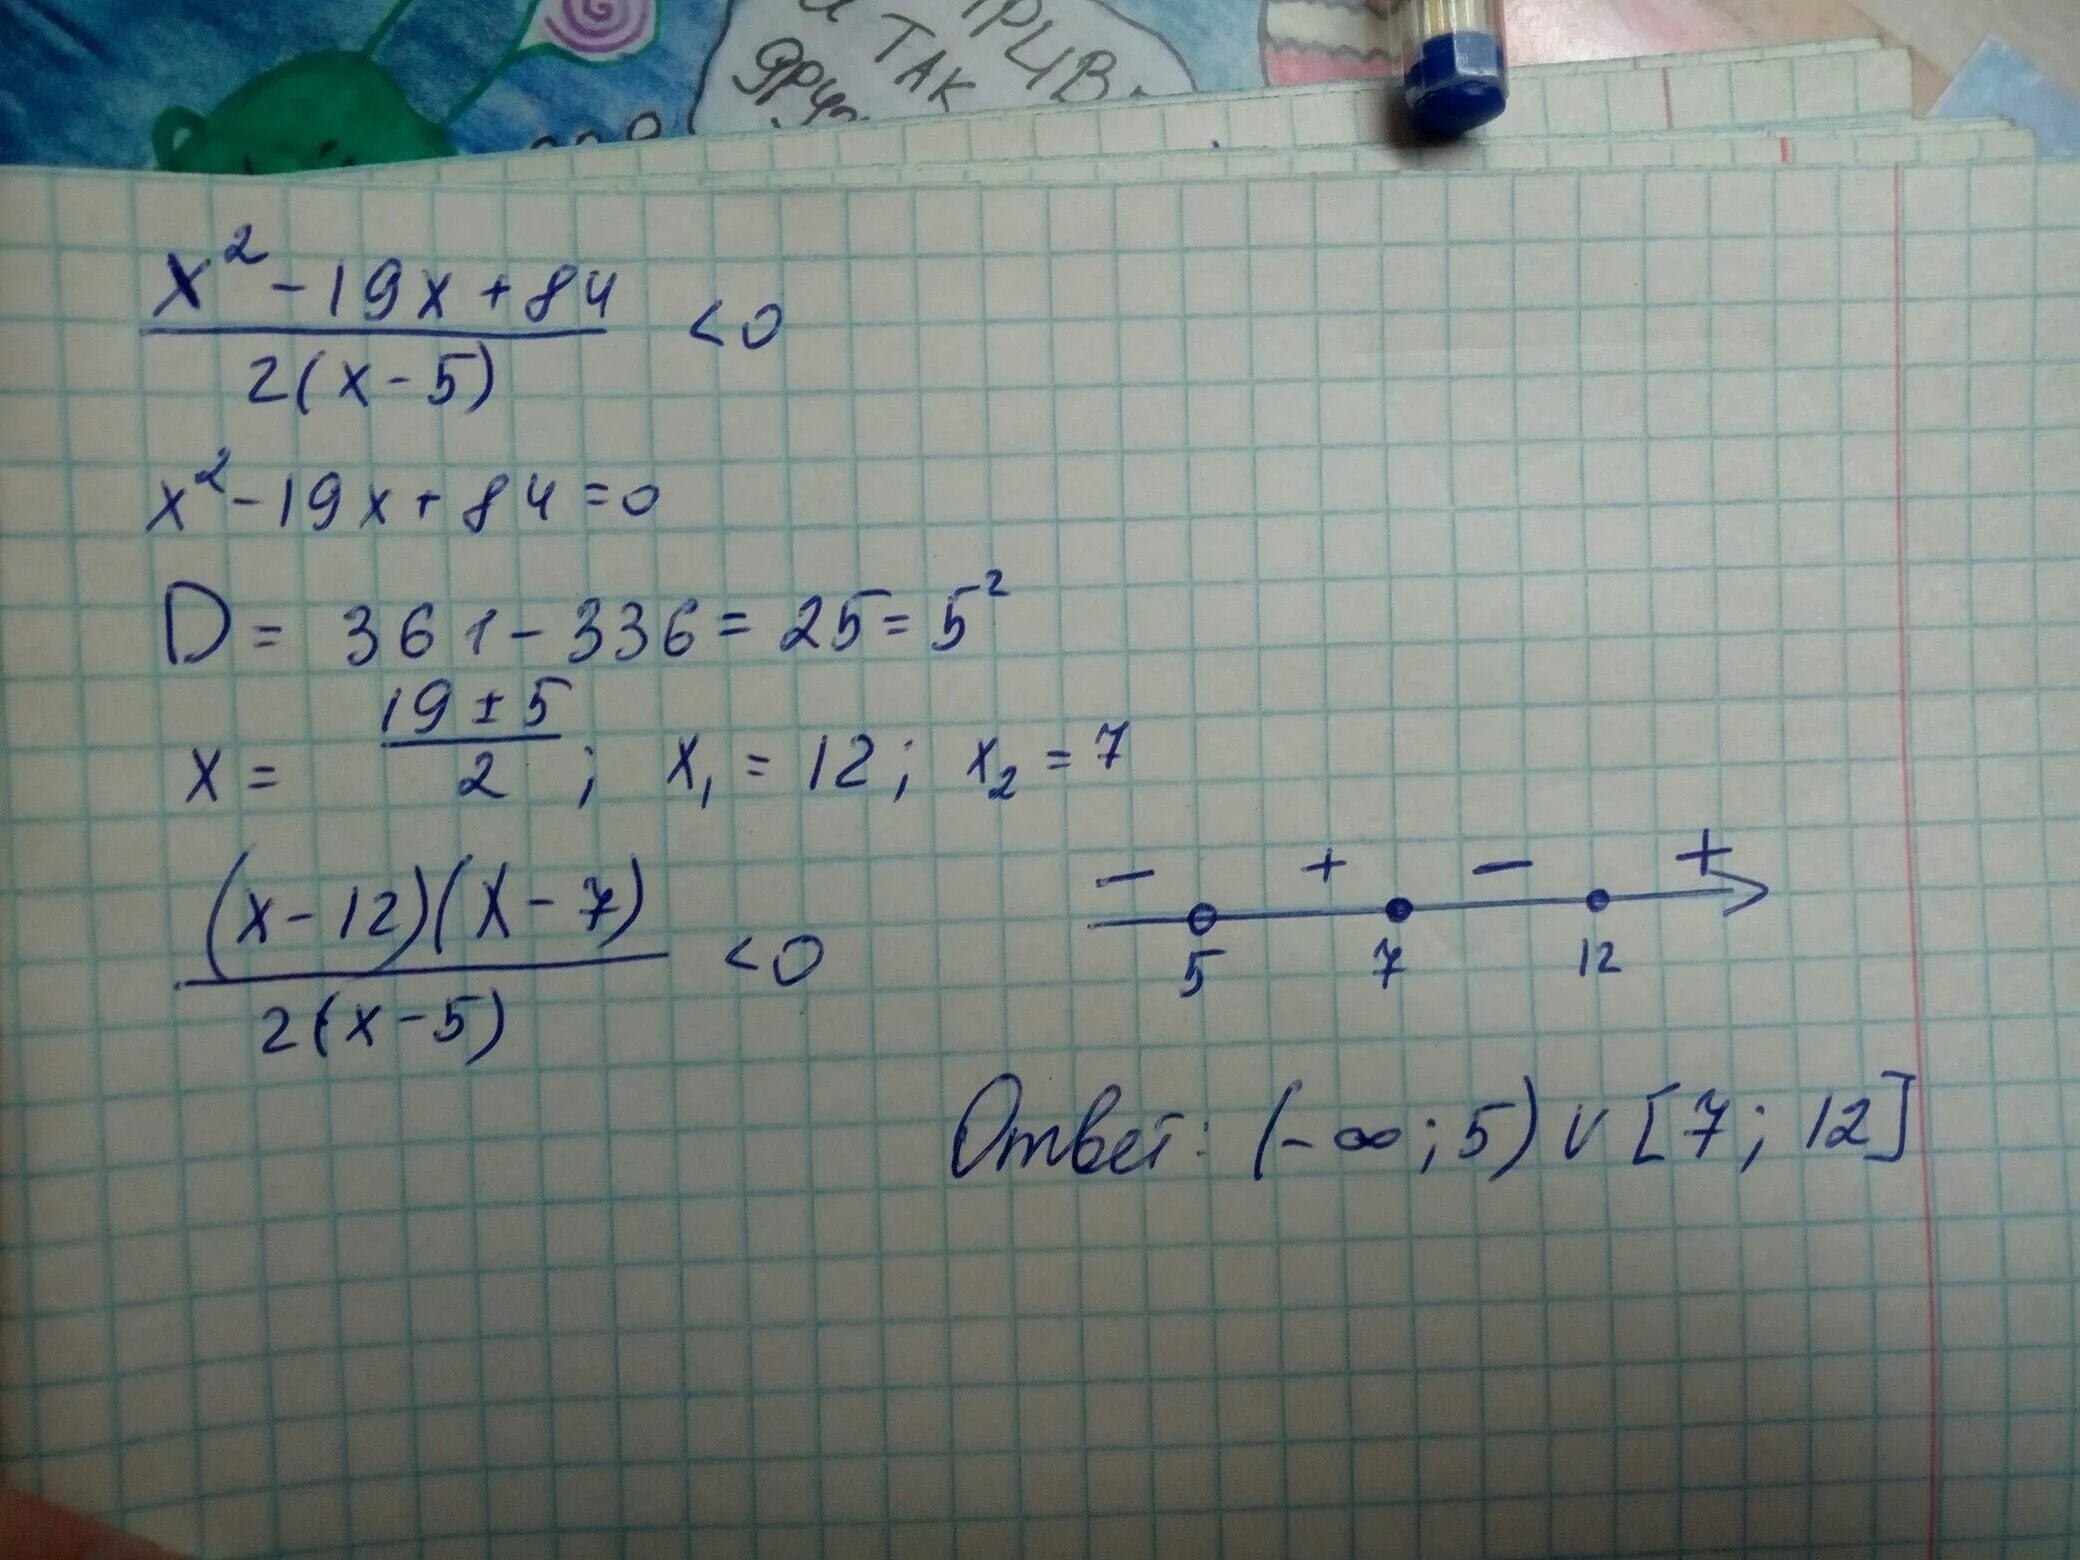 2x 2 2x 0.5 4 2. X^2 -19x+84/2(x-5)>0. 0 5x 2x-5 2x+5. X² - 5x - 84 = 0. Решите неравенство x2-19x +84/ 2 (x-5).